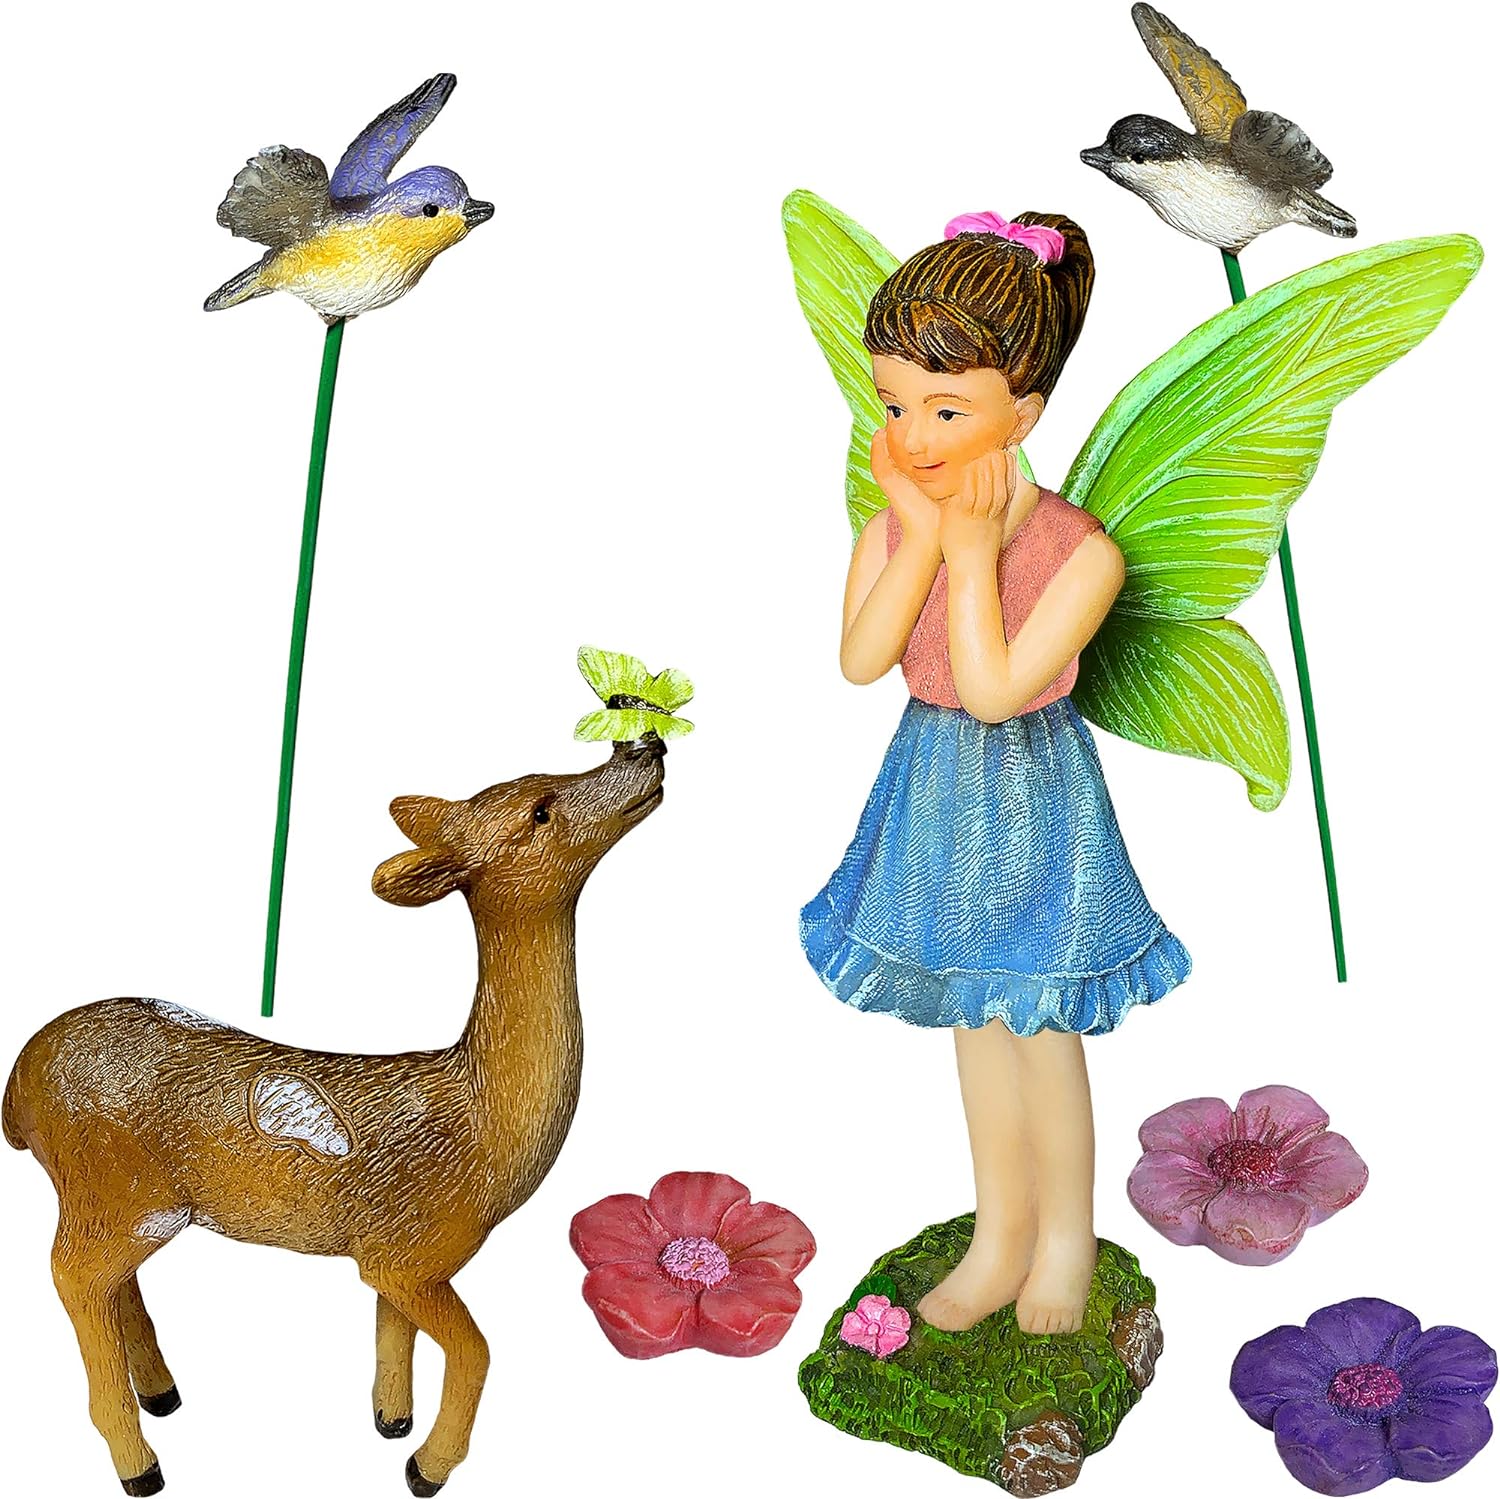 6 miniature accessories and figurines kit